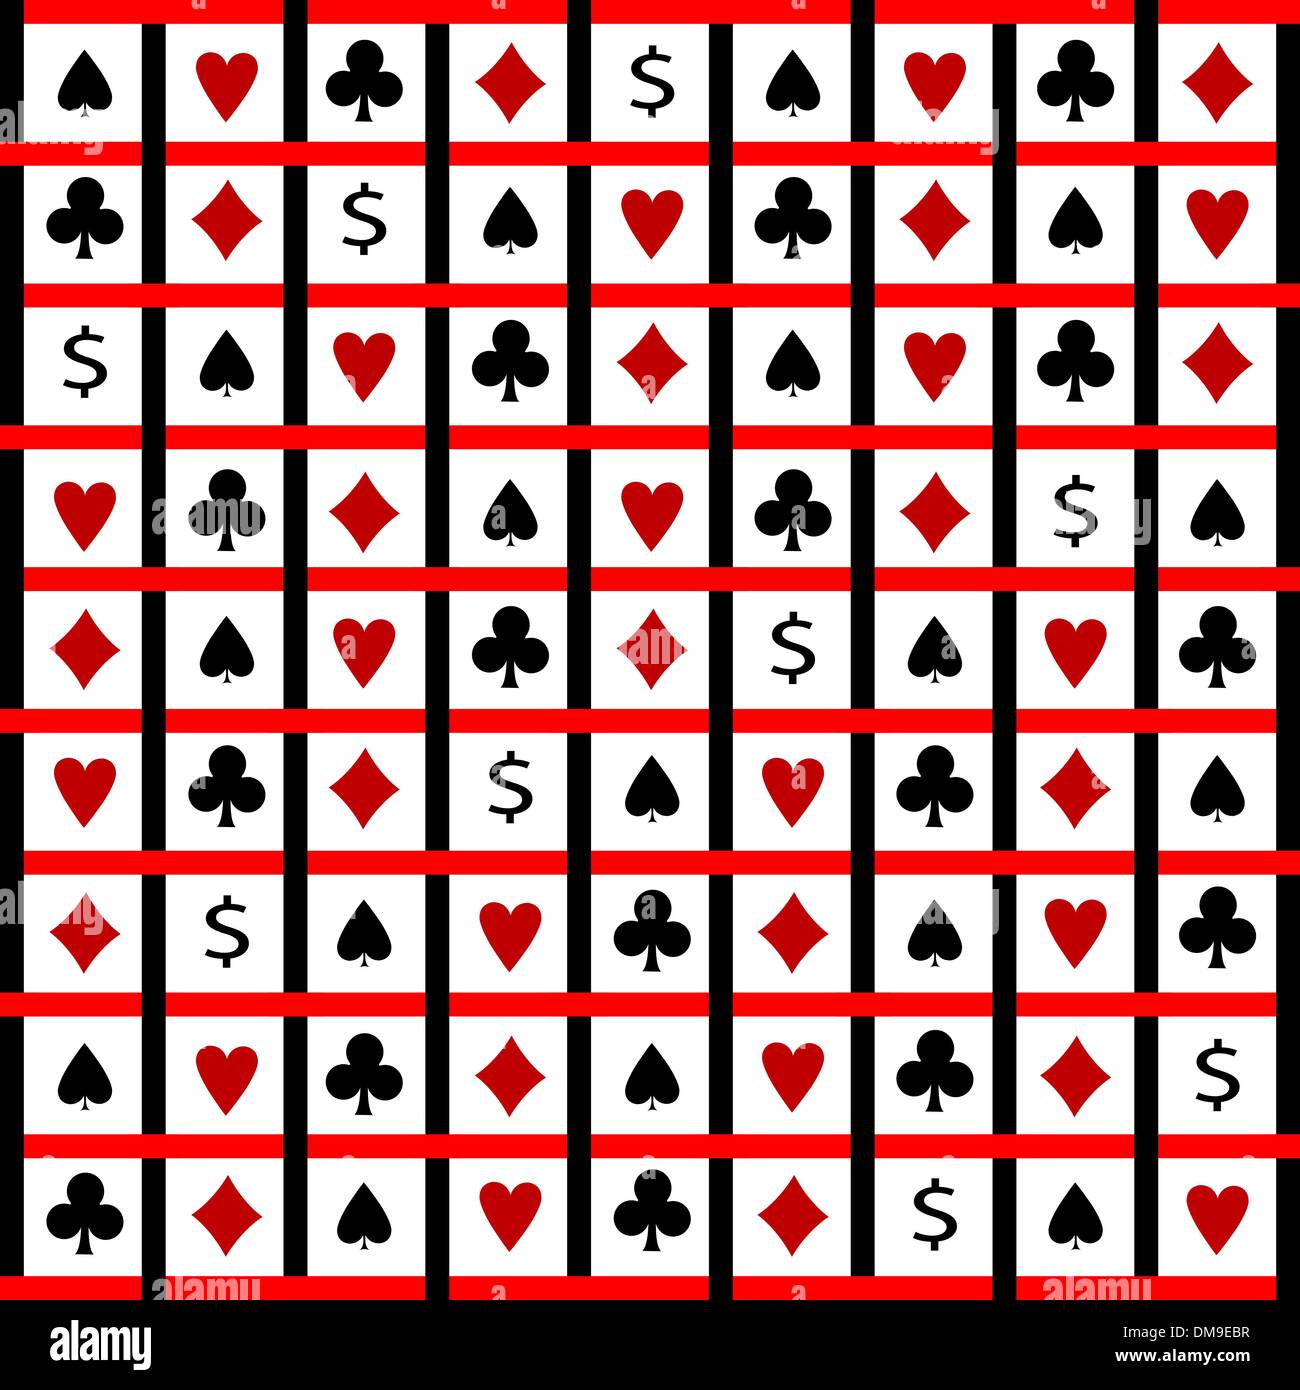 card symbols composition Stock Vector